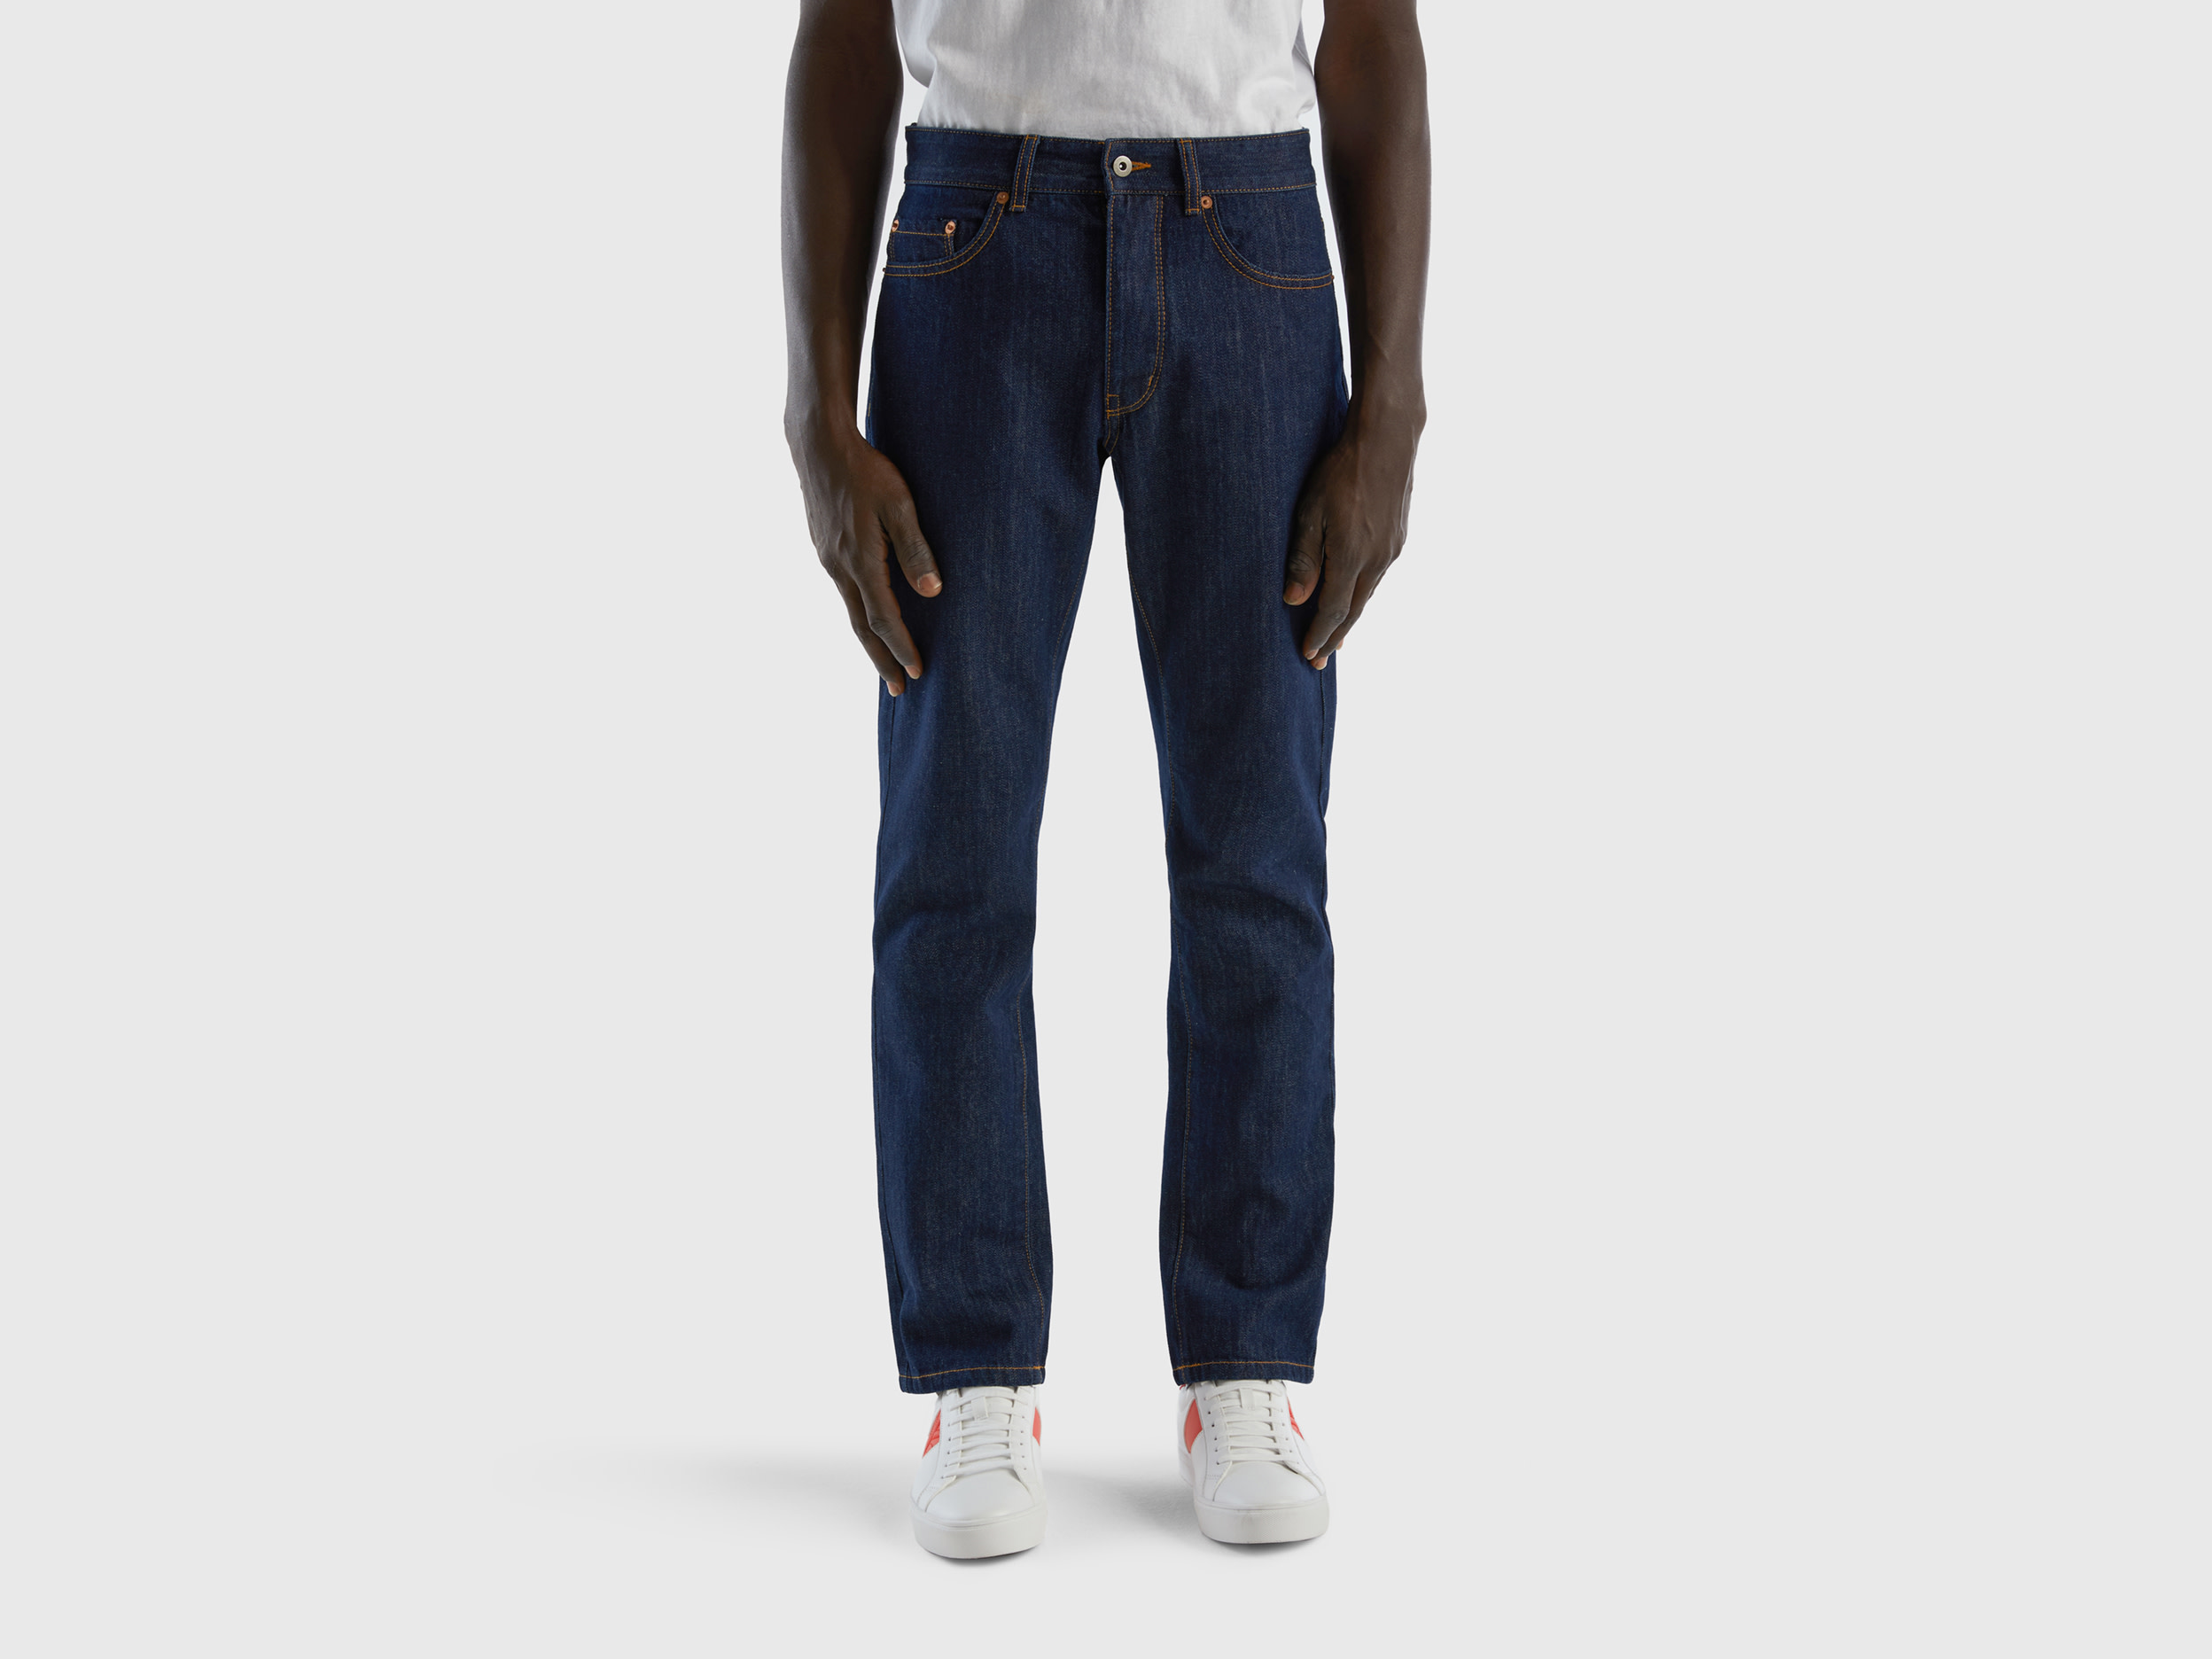 Benetton, Straight Leg 100% Cotton Jeans, size 31, Dark Blue, Men